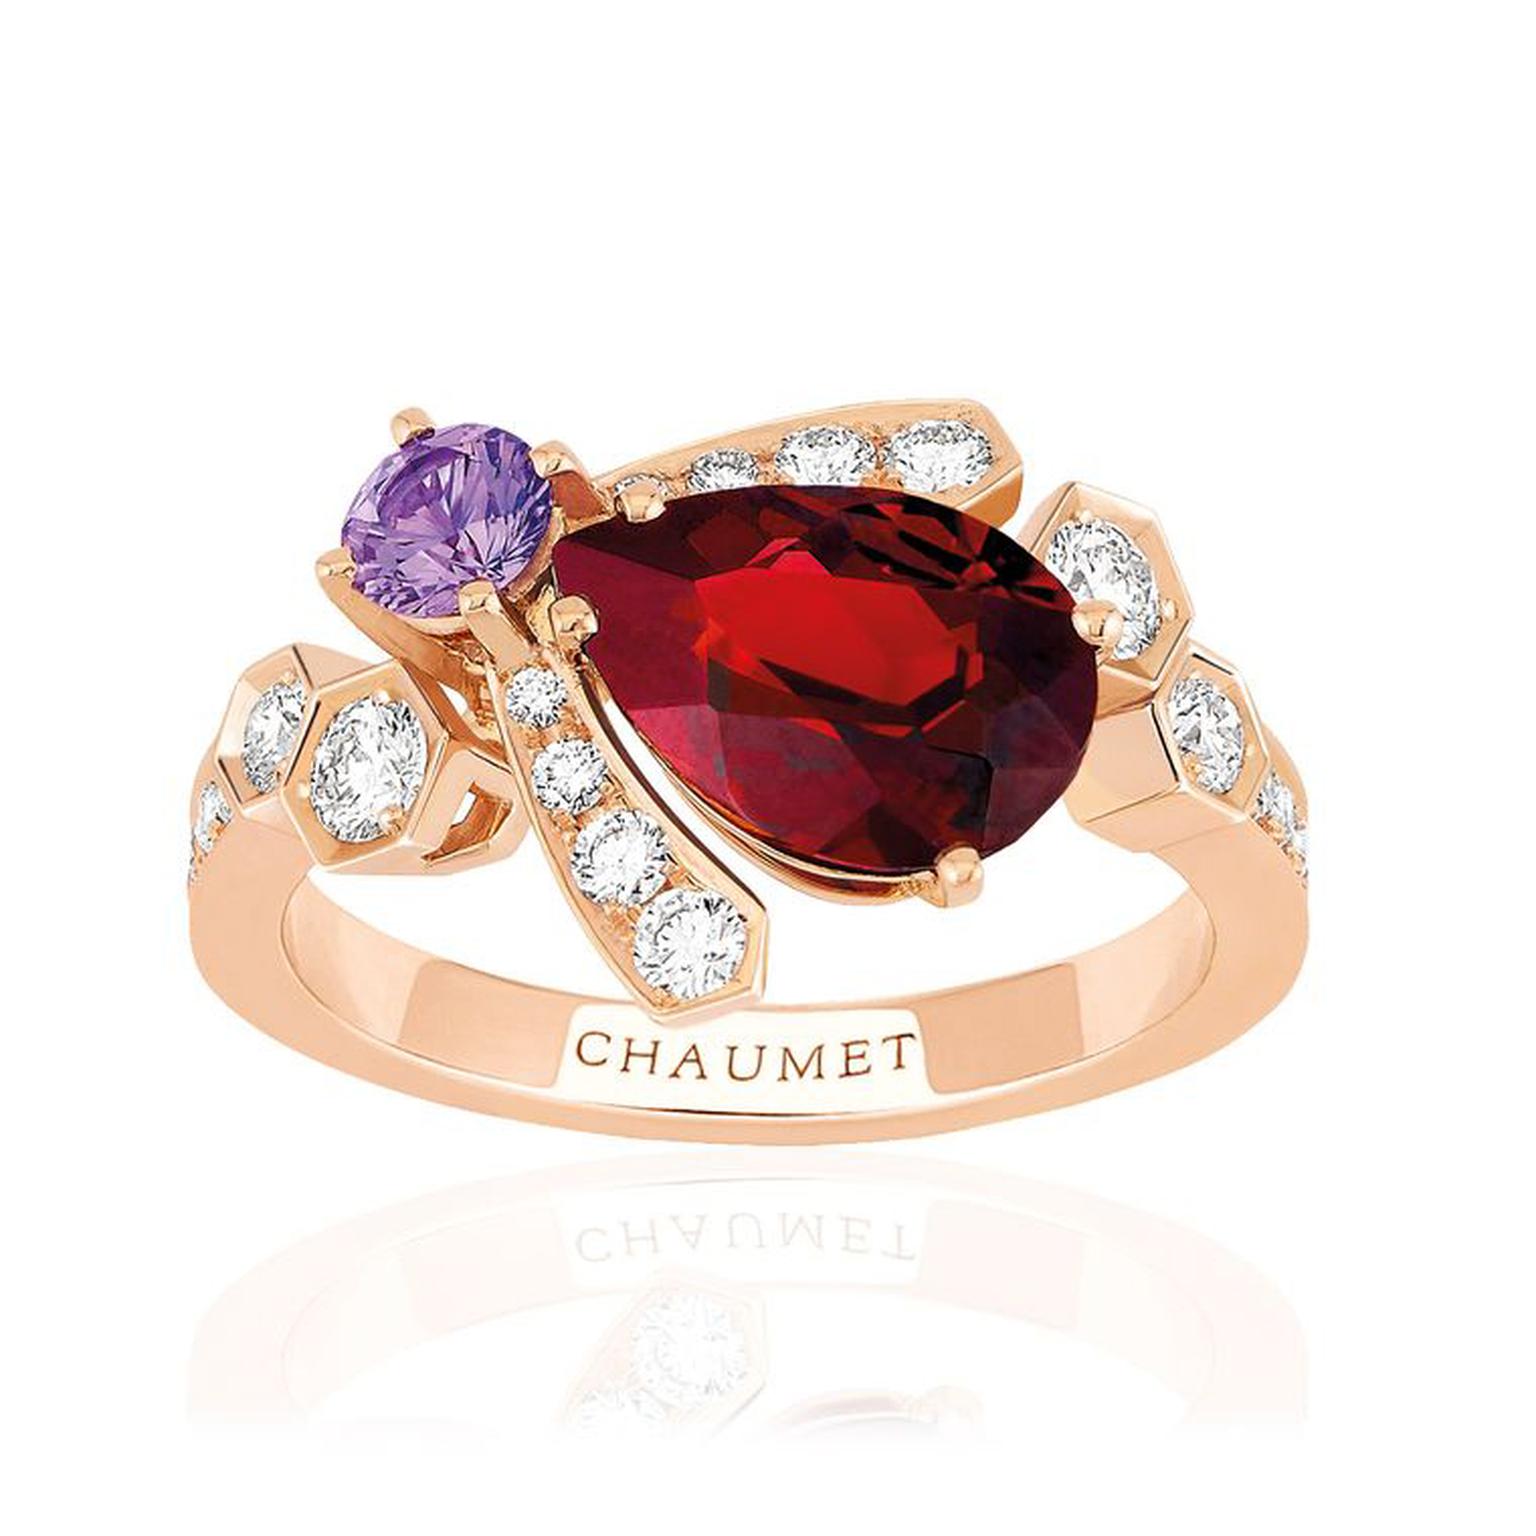 Chaumet garnet and sapphire ring